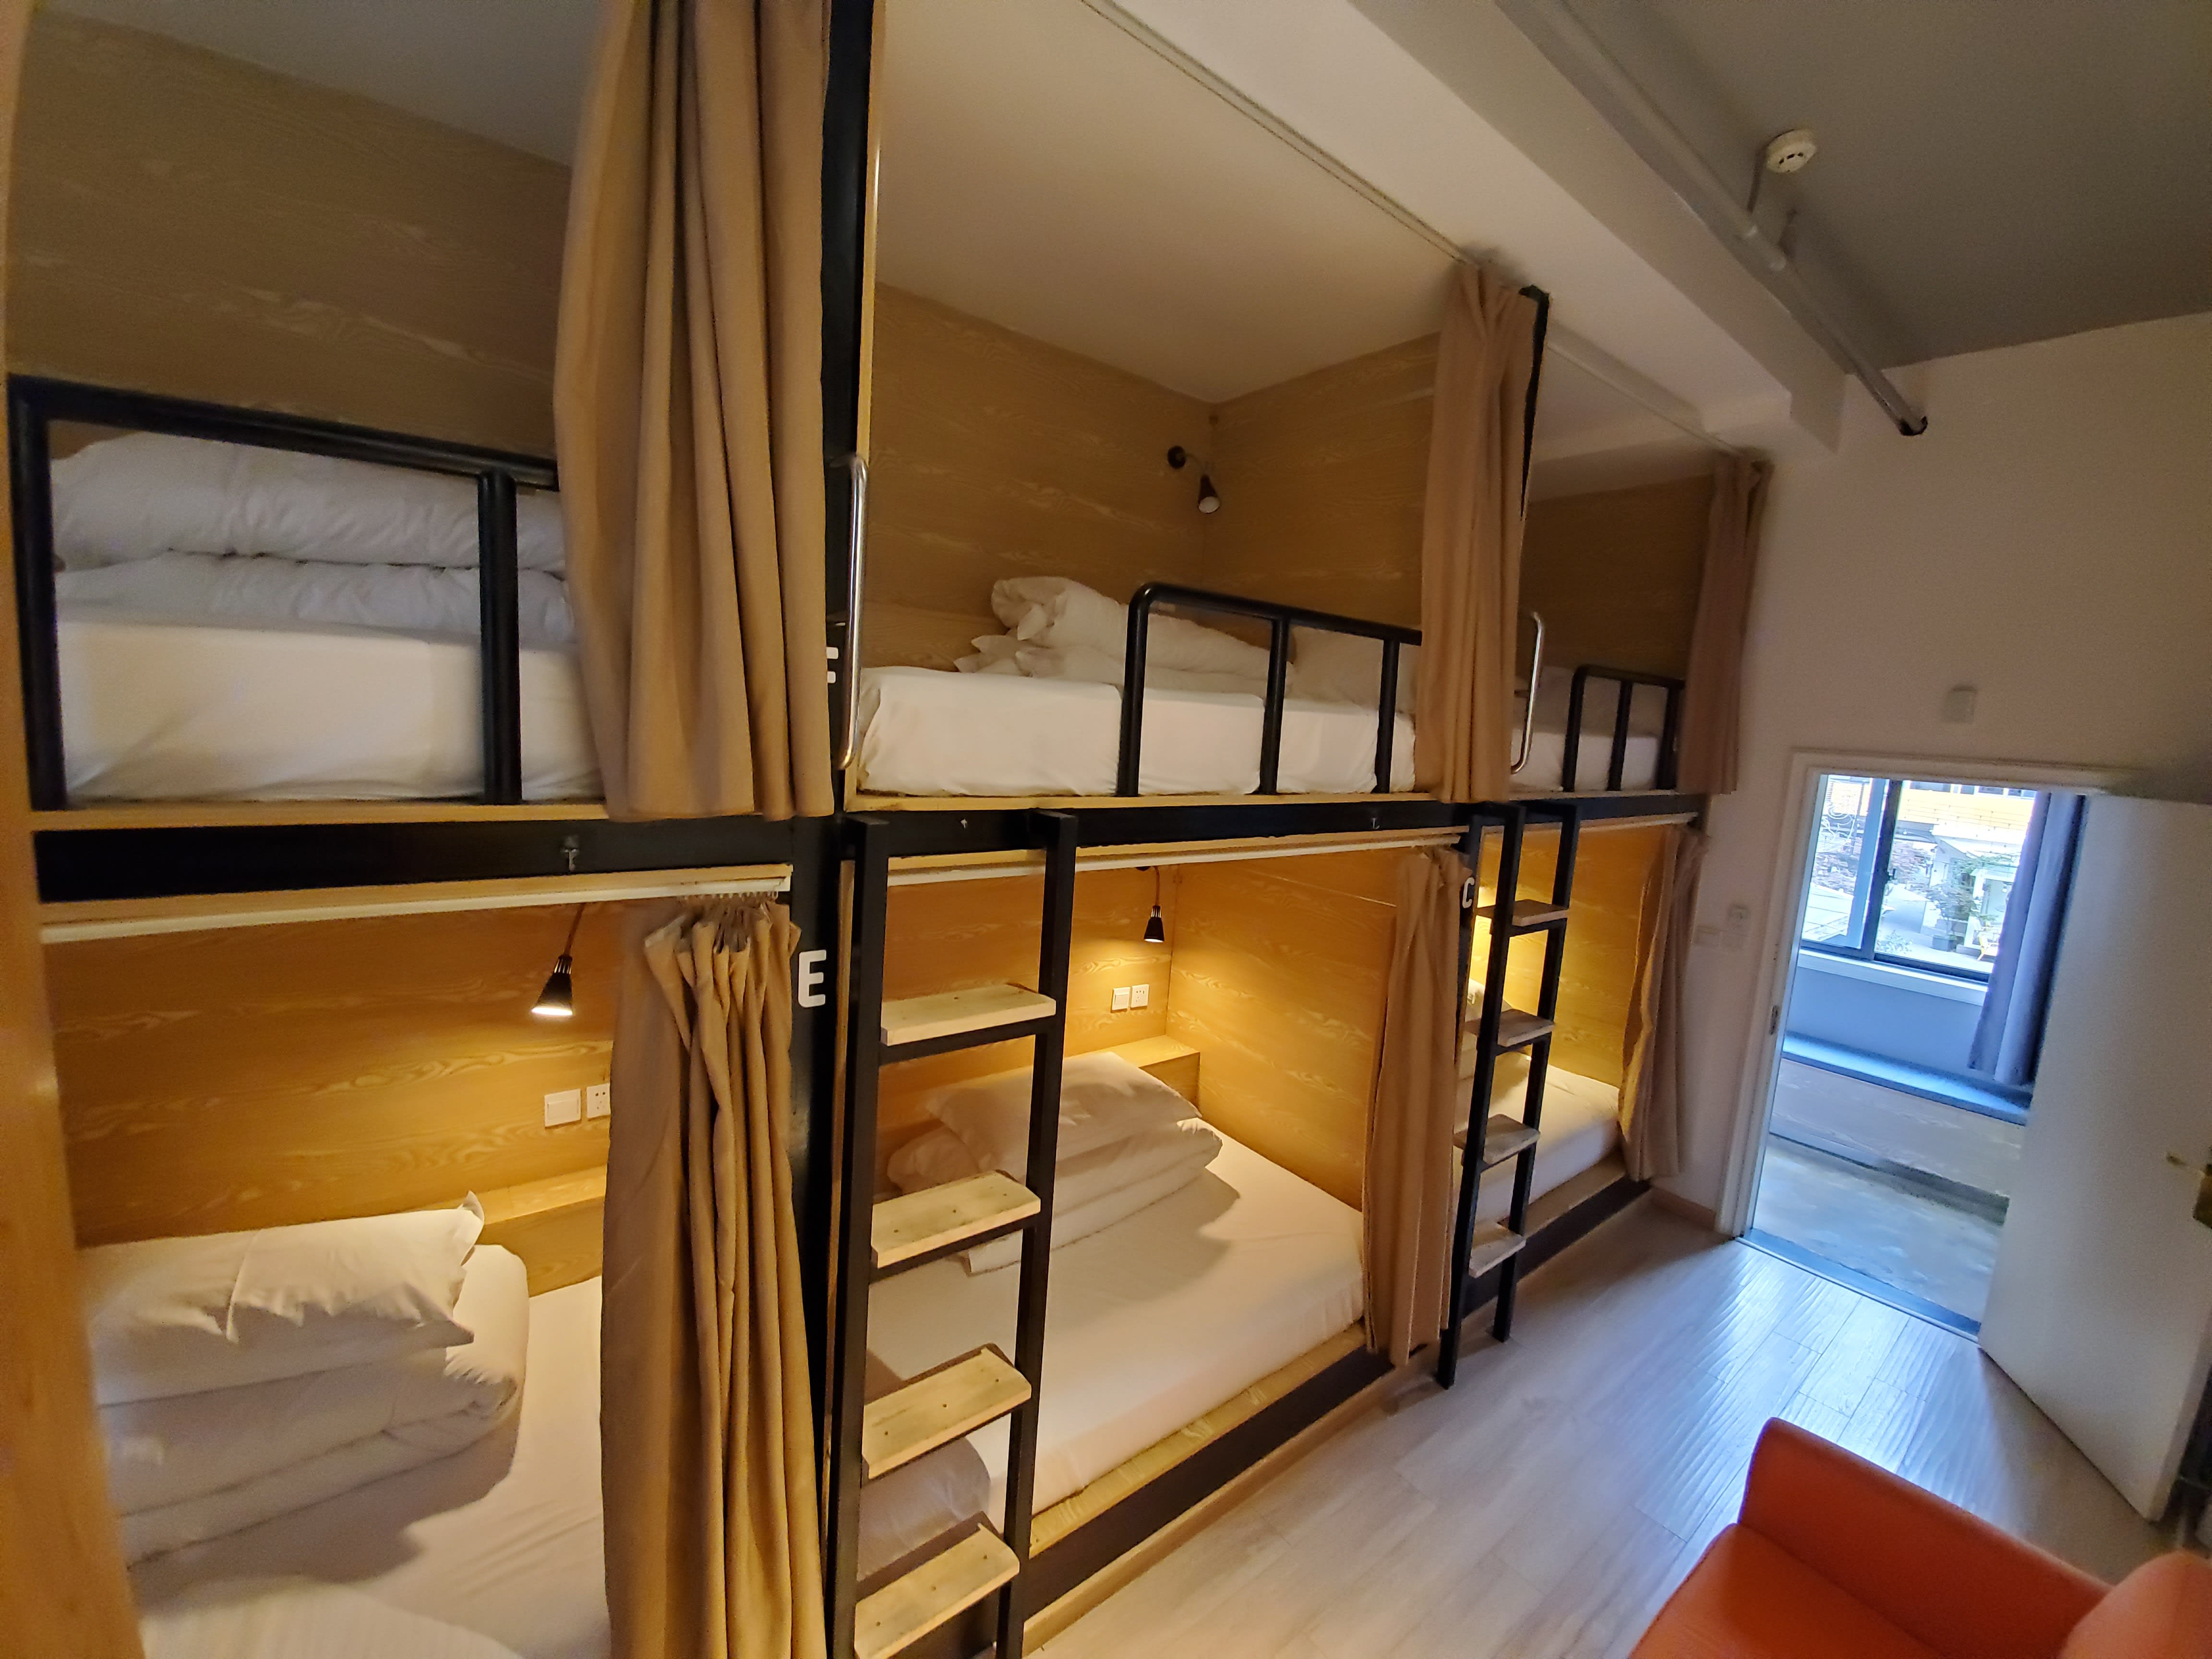 Masherbrum Outdoor Travelling Hostel, Chengdu - 2020 Prices & Reviews ...